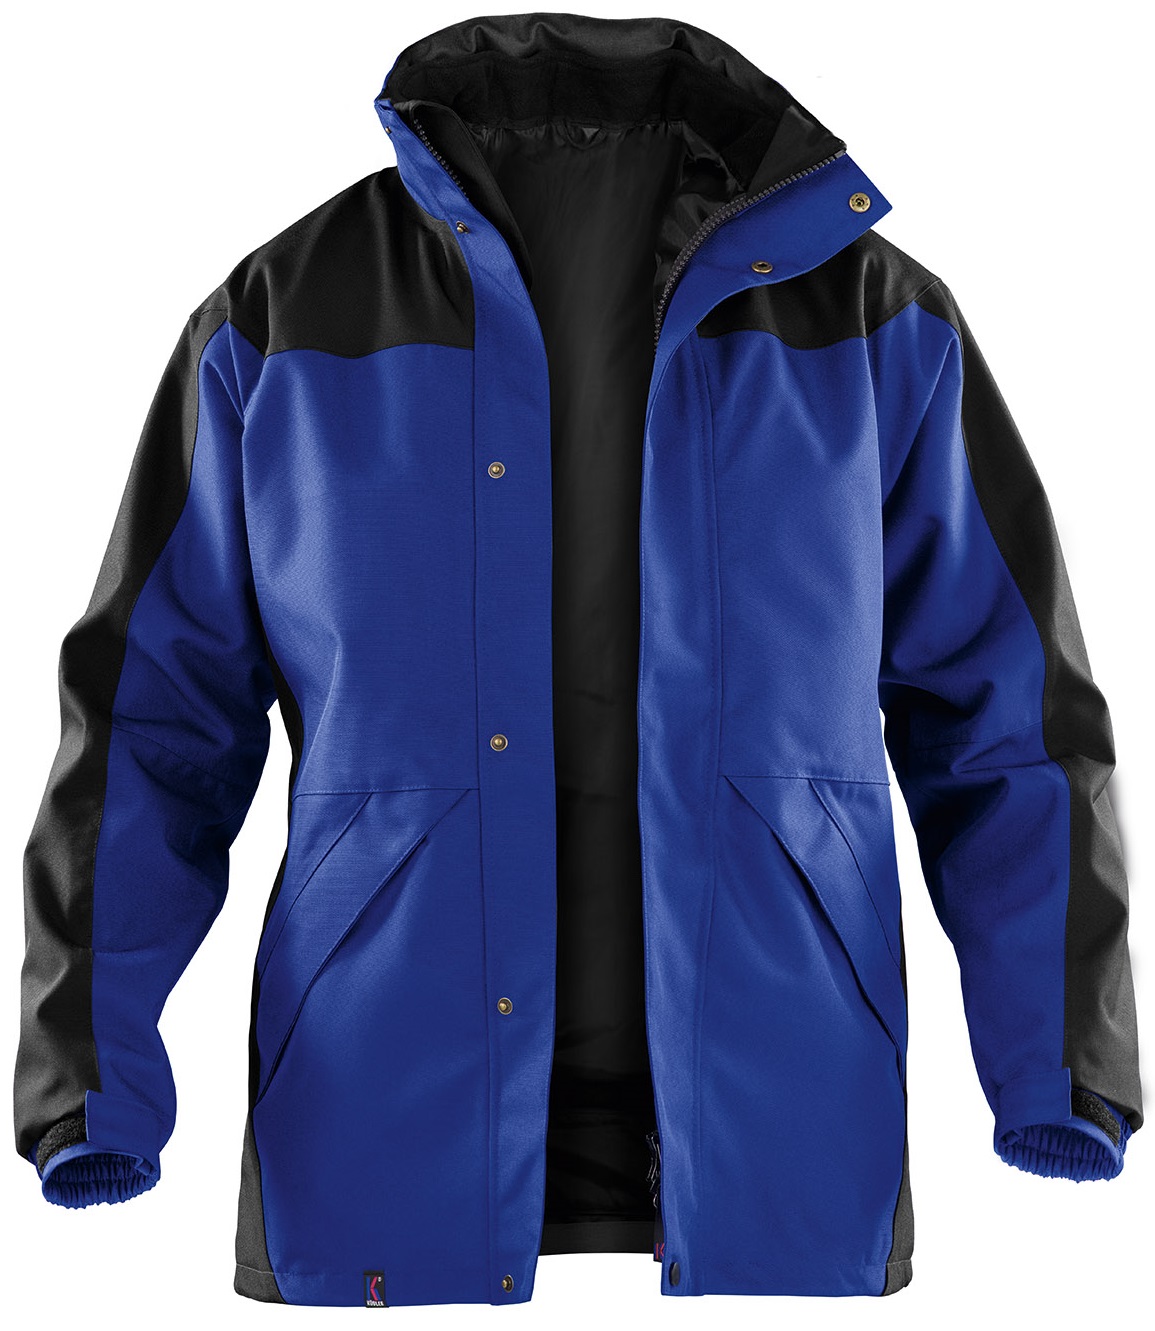 KÜBLER-Regenschutz, Doppel-Jacke, Wetter-Regen-Nässe-Schutz, Dress Inno Plus, kornblau/schwarz